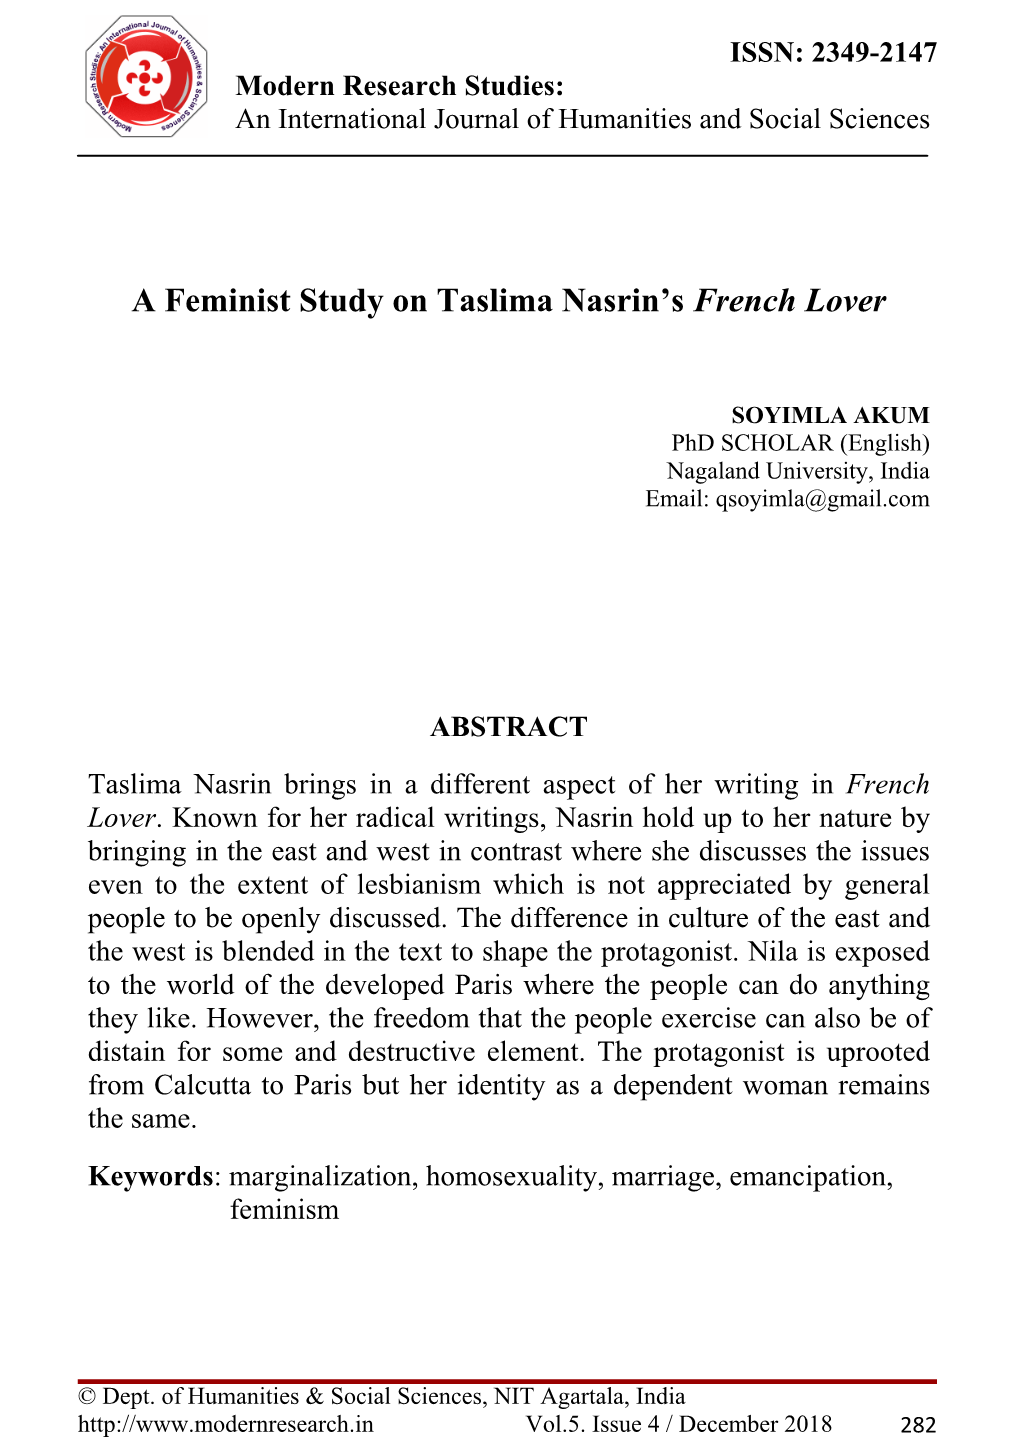 A Feminist Study on Taslima Nasrin's French Lover